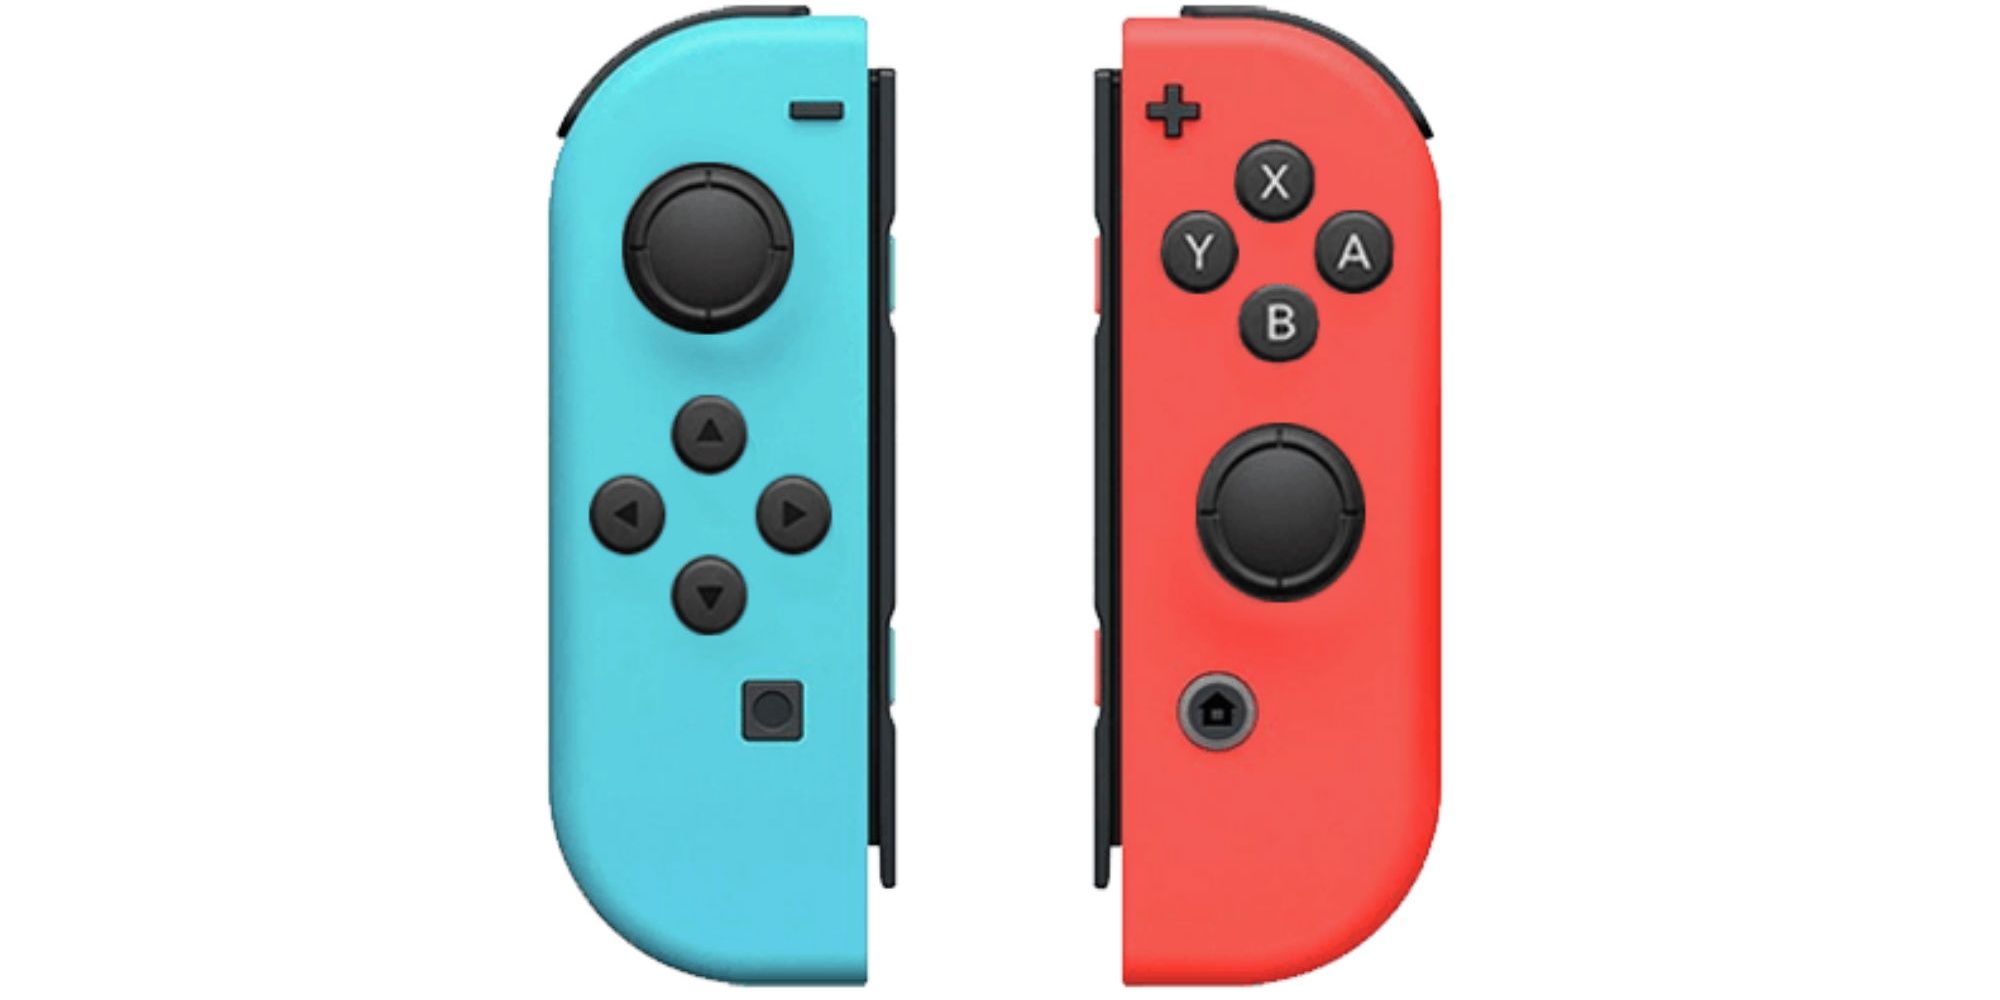 Nintendo Switch OLED model has improved Joy-Cons, but drift